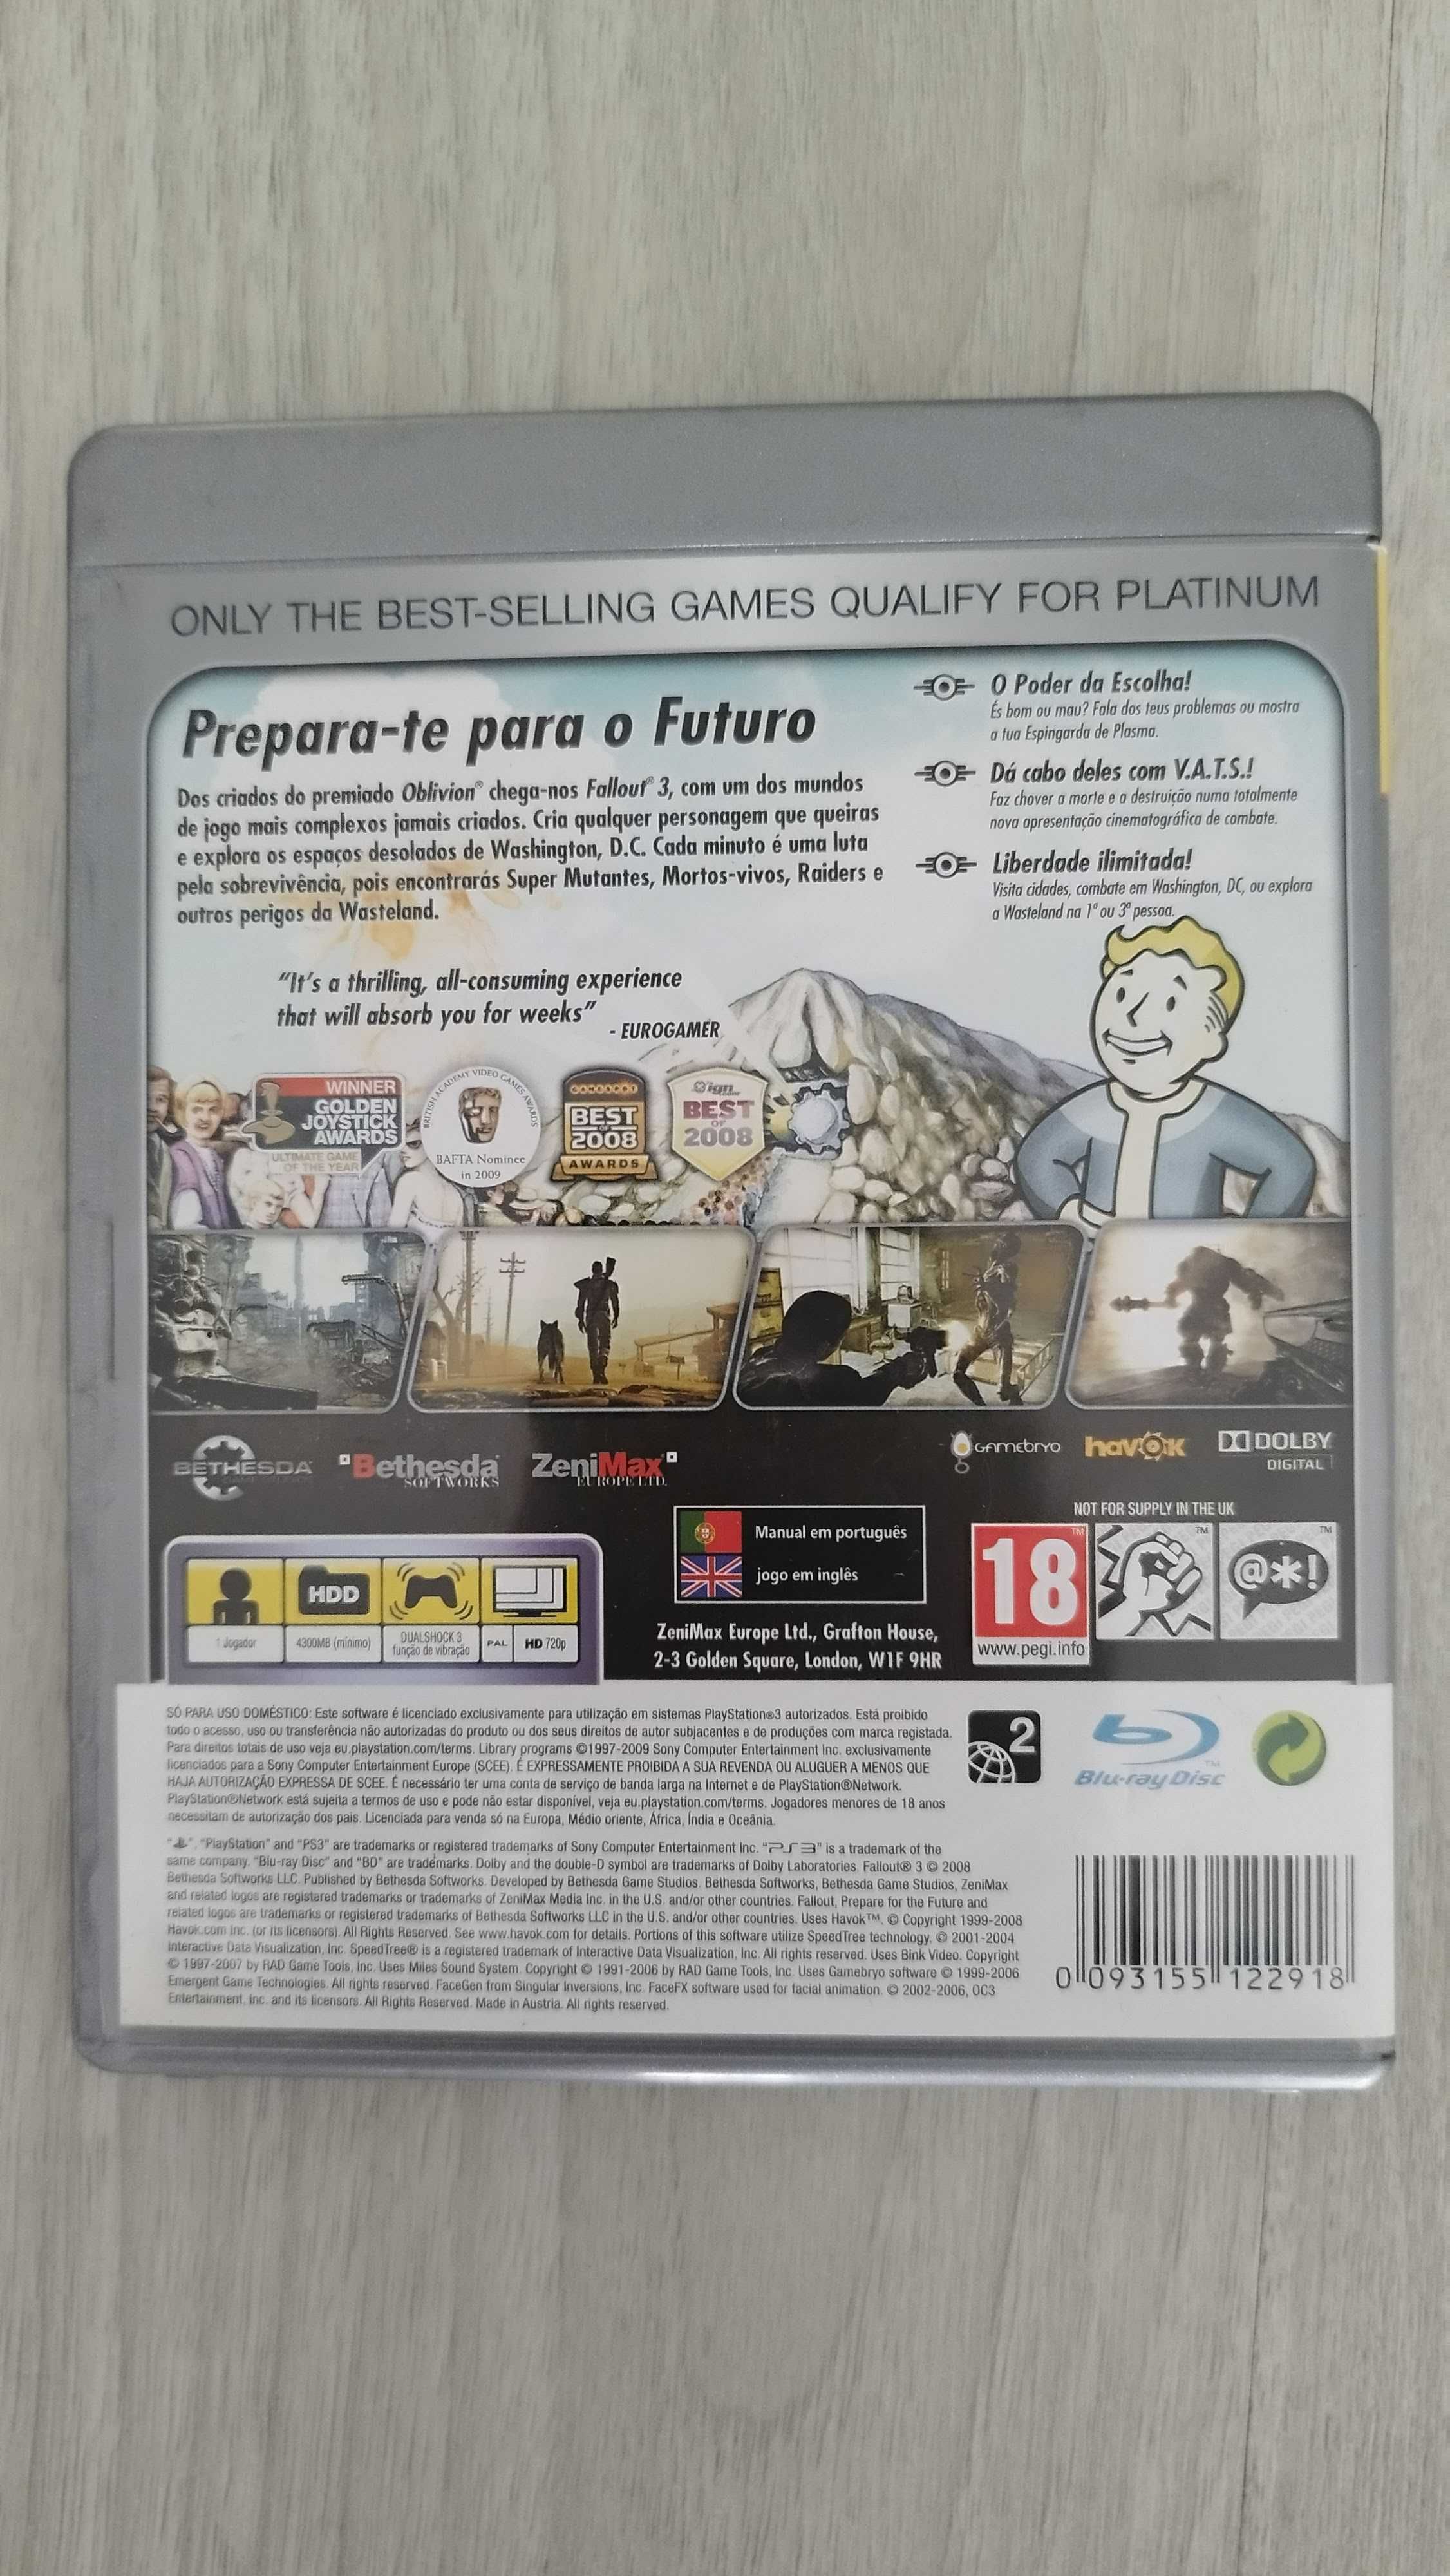 Fallout 3 - PS3 - Playstation